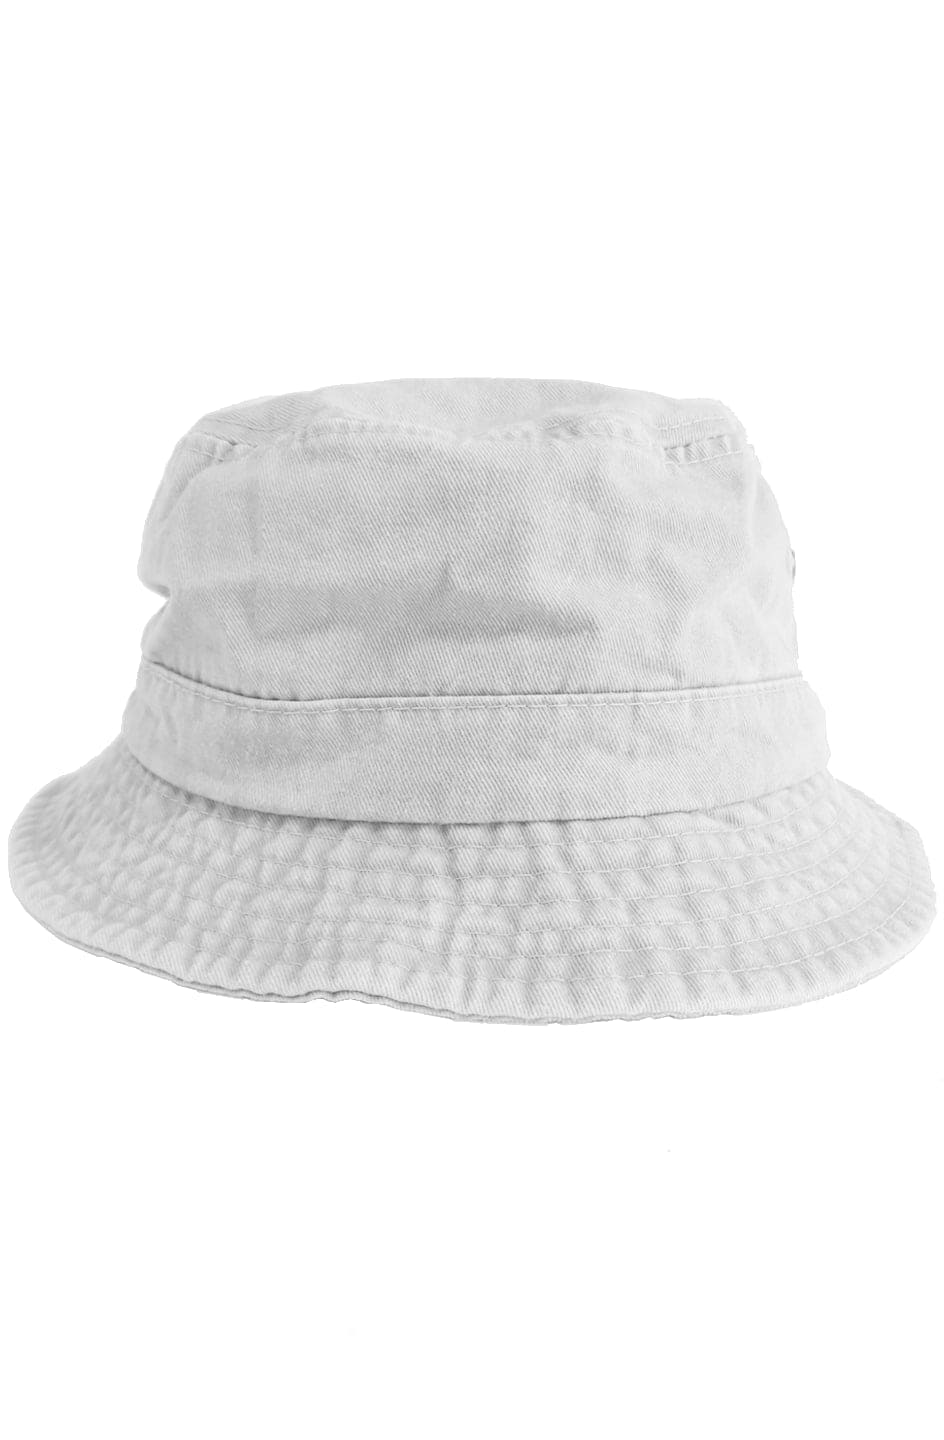 Athletic Apparatus White bucket hat